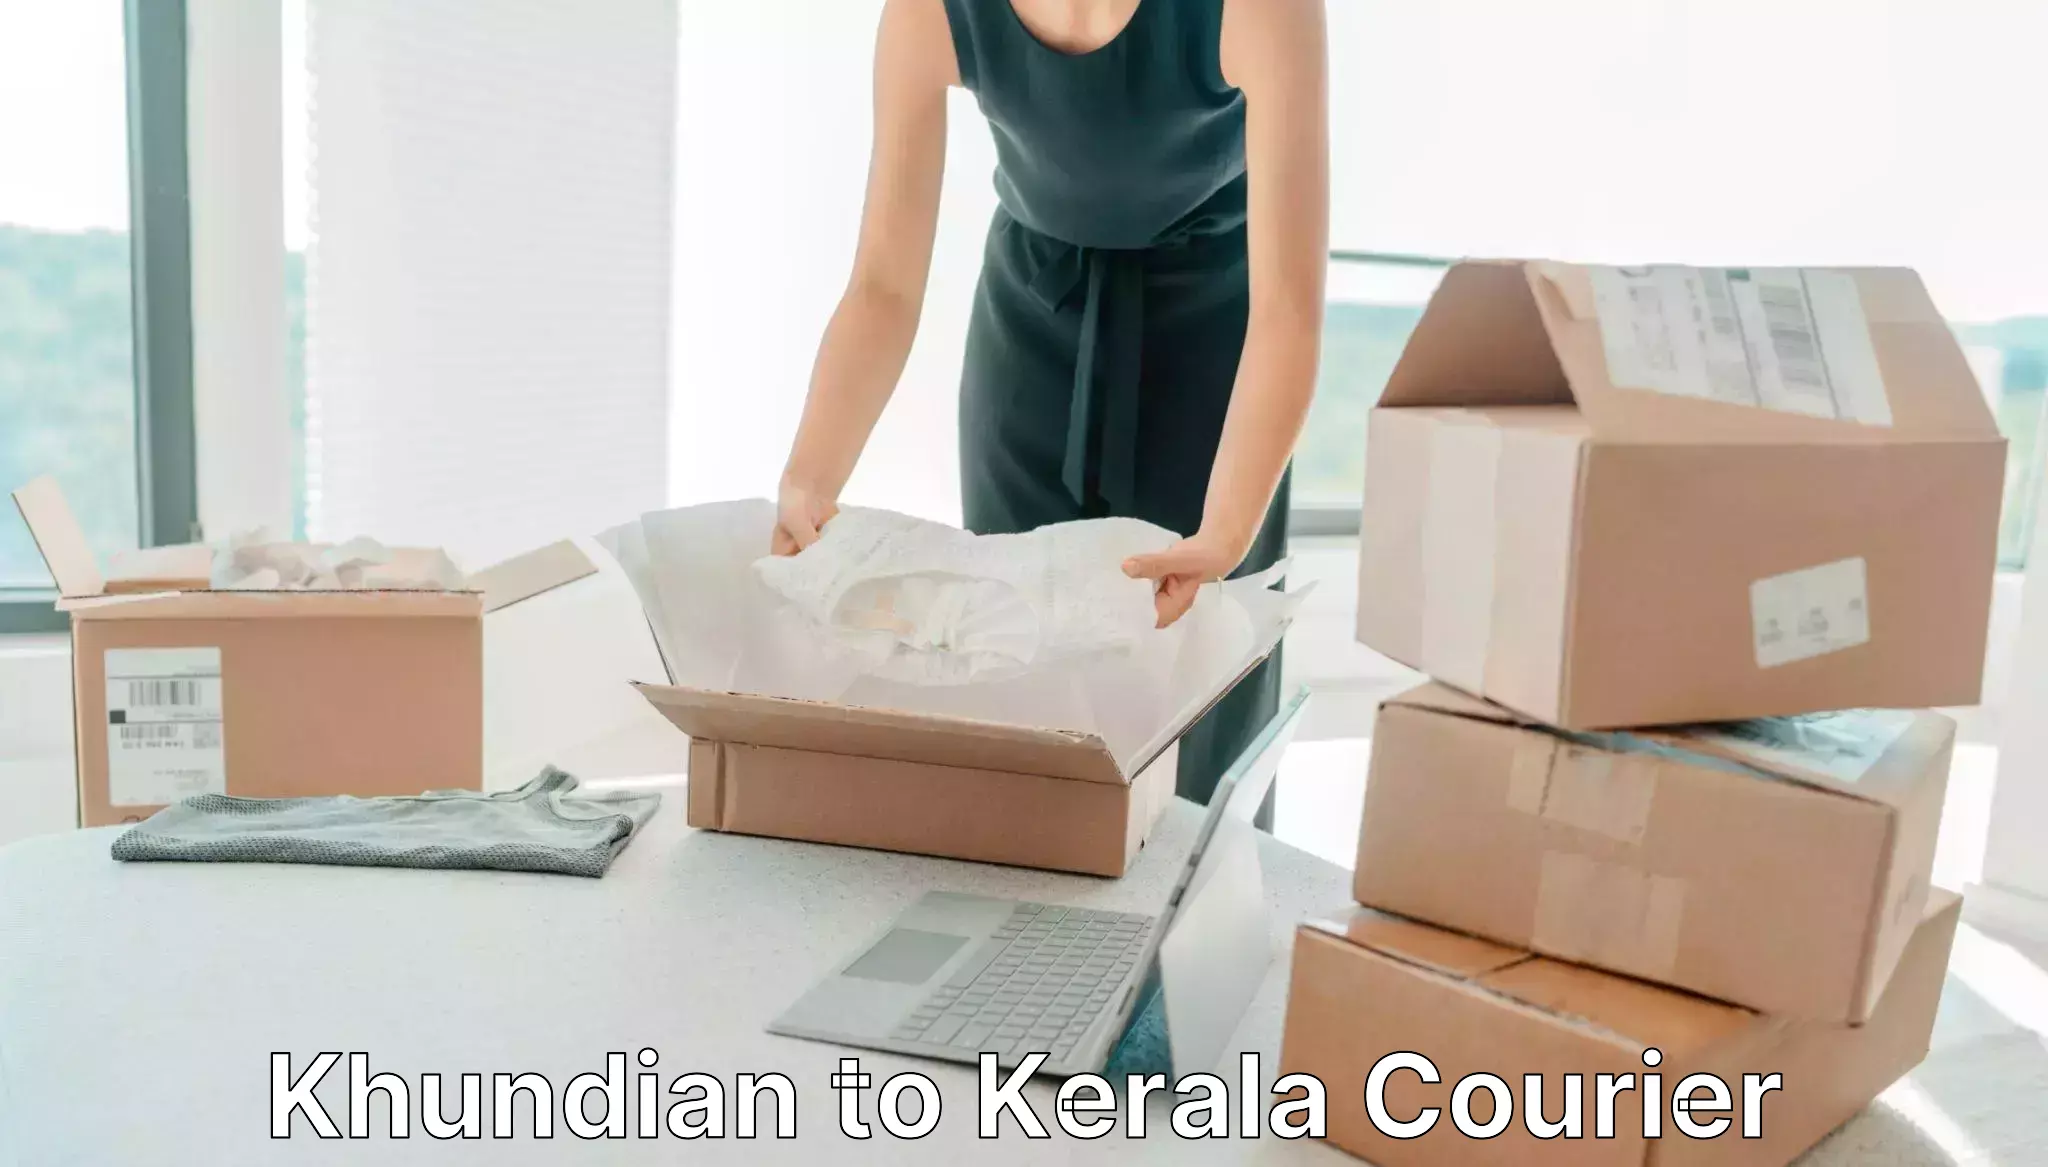 Customer-focused courier Khundian to Cochin Port Kochi